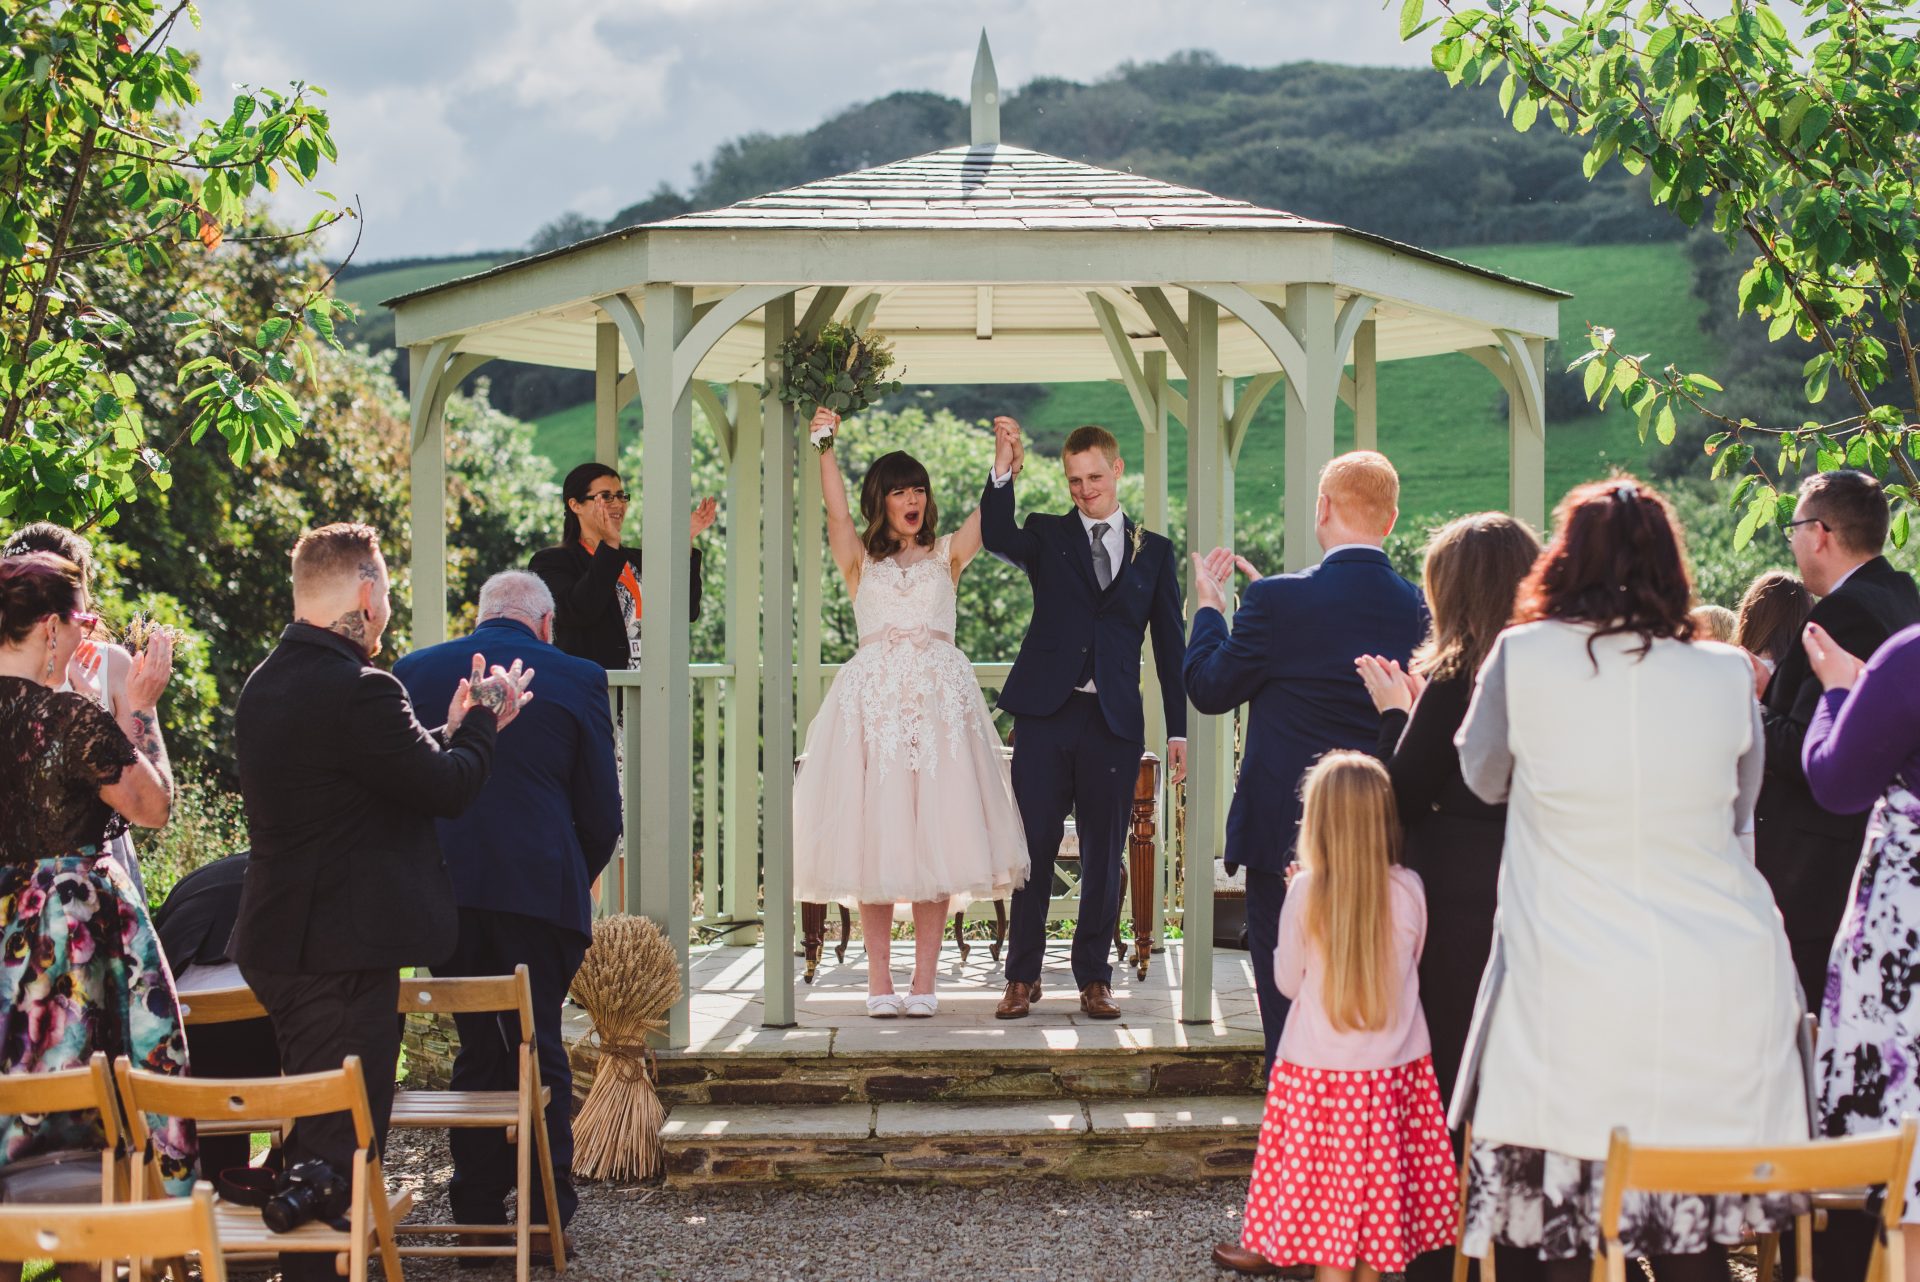 Pengenna Manor Wedding Photography - Stewart Girvan